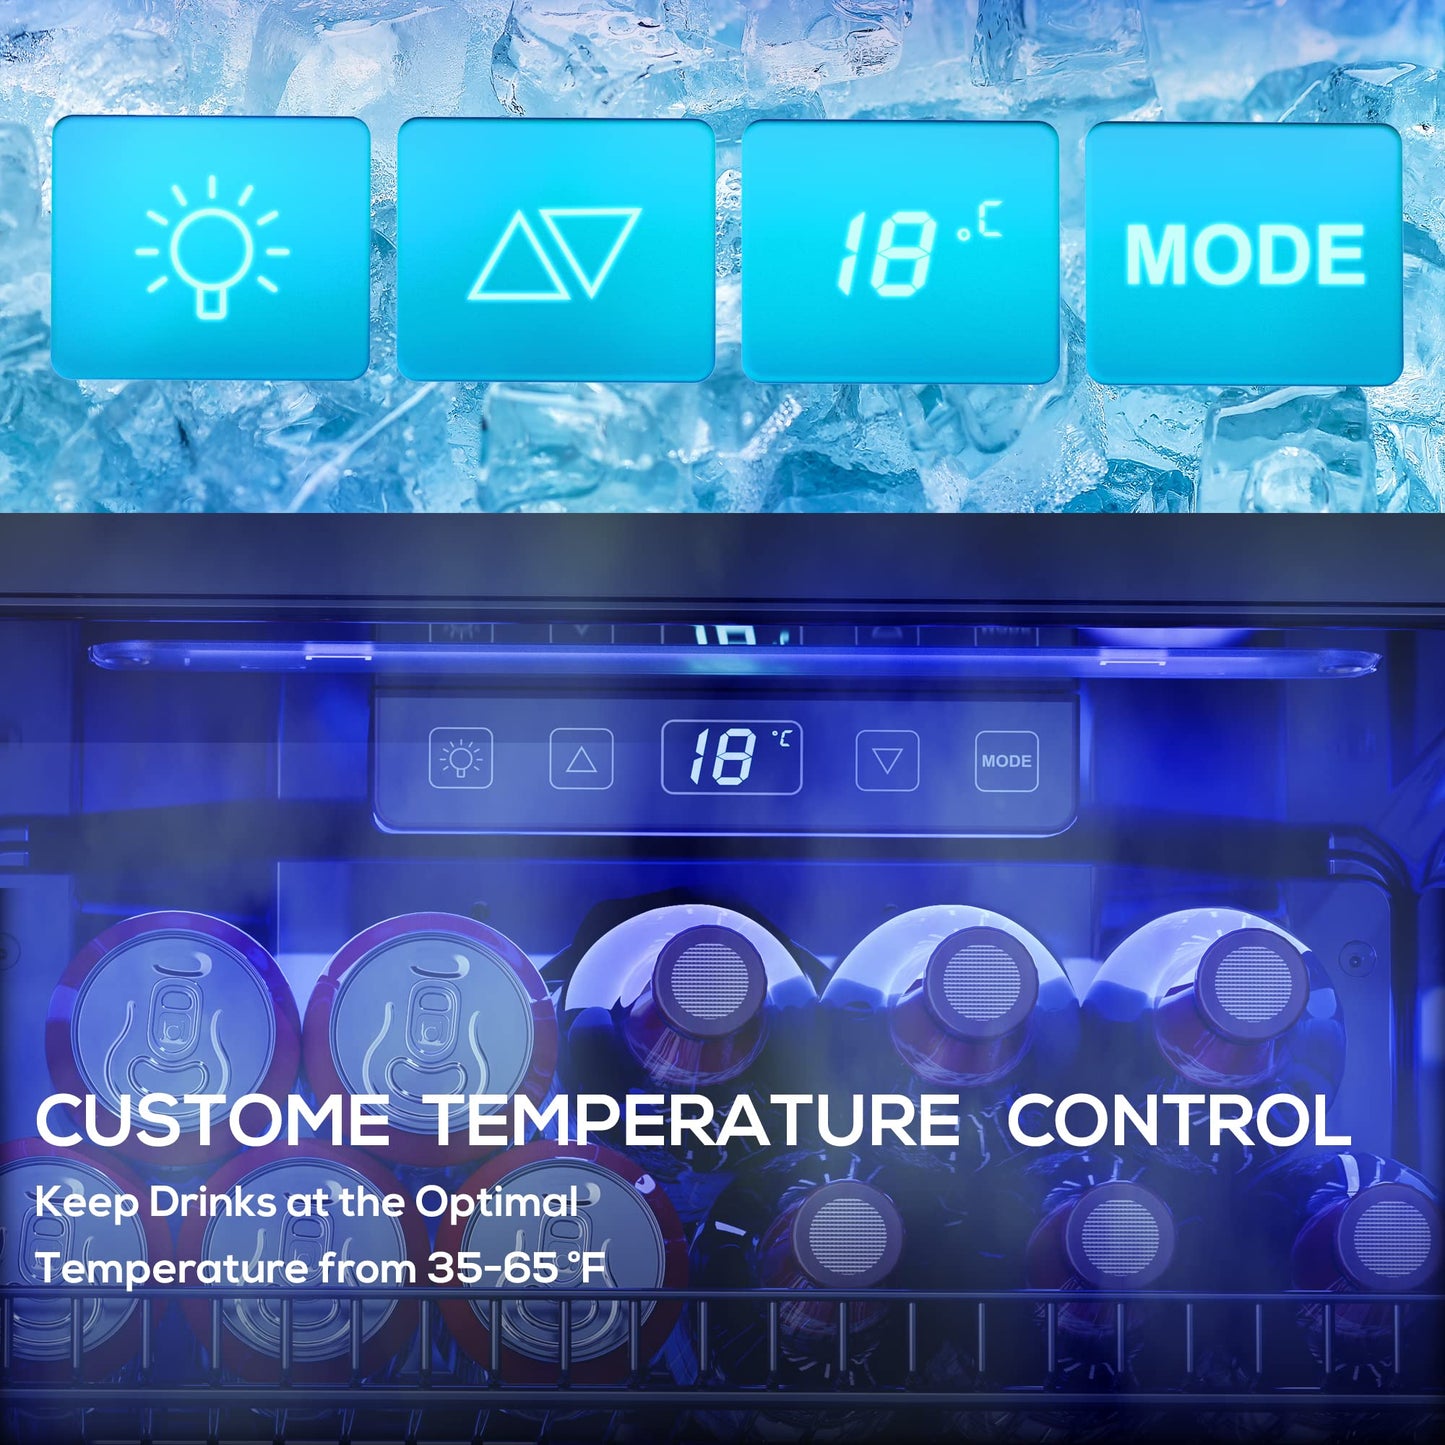 Manastin Beverage Refrigerator Cooler-120 Cans Freestanding Mini Fridge Cooler with Glass Door, Adjustable Shelves & Digital Temperature Display for Soda, Wine or Beer (Black, 3.2 Cu.Ft)